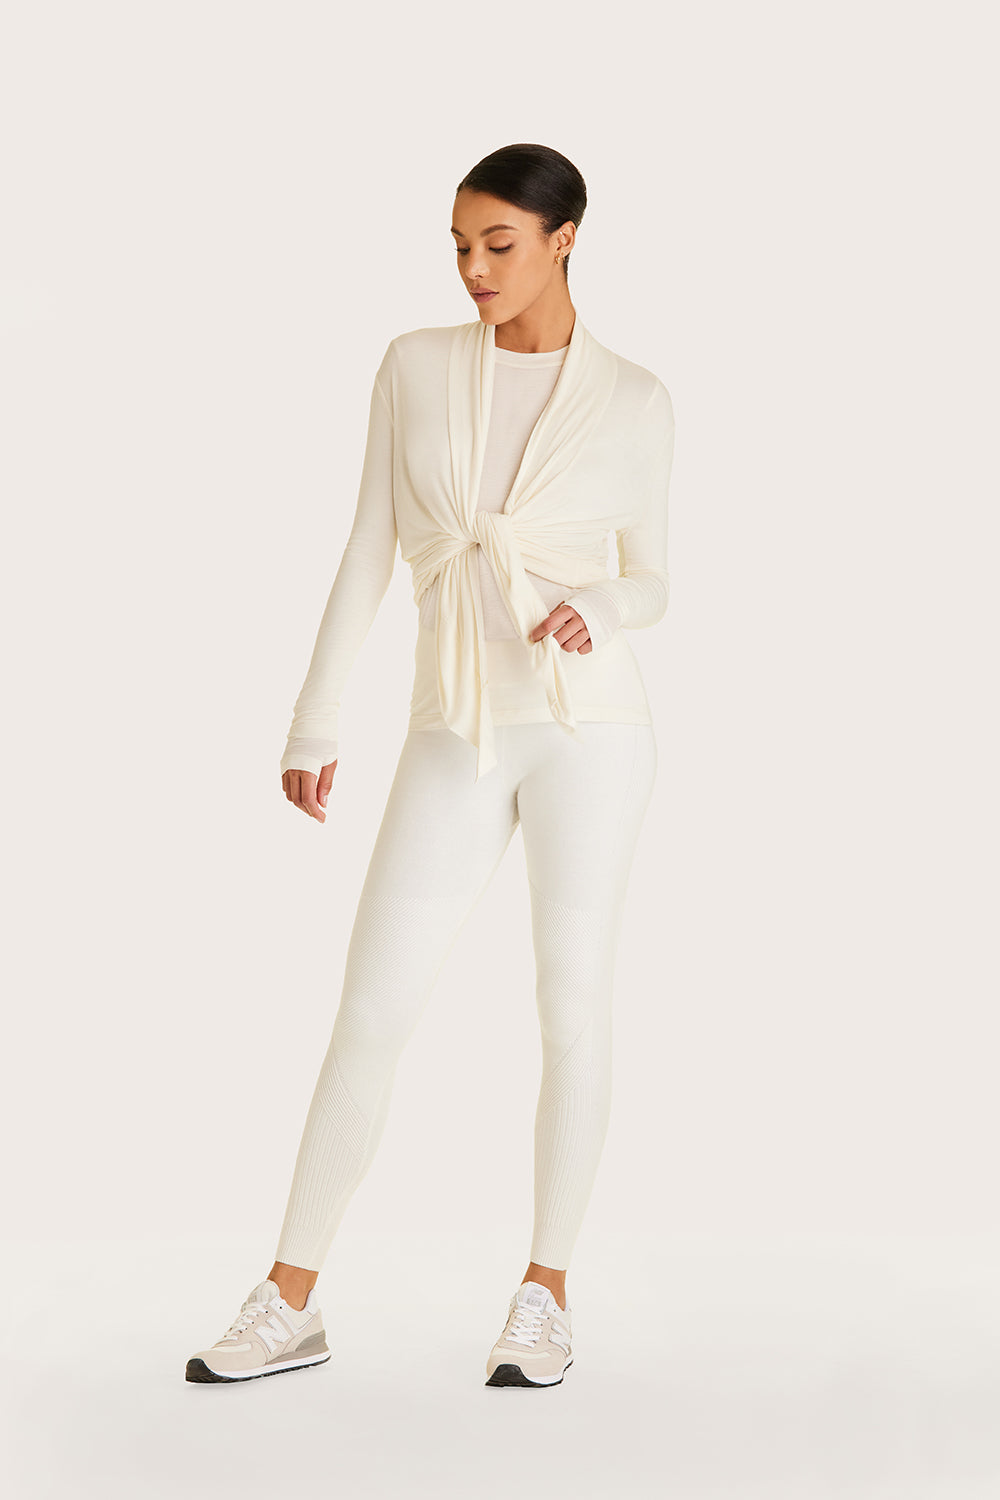 Alala women's cashmere open cardigan in white